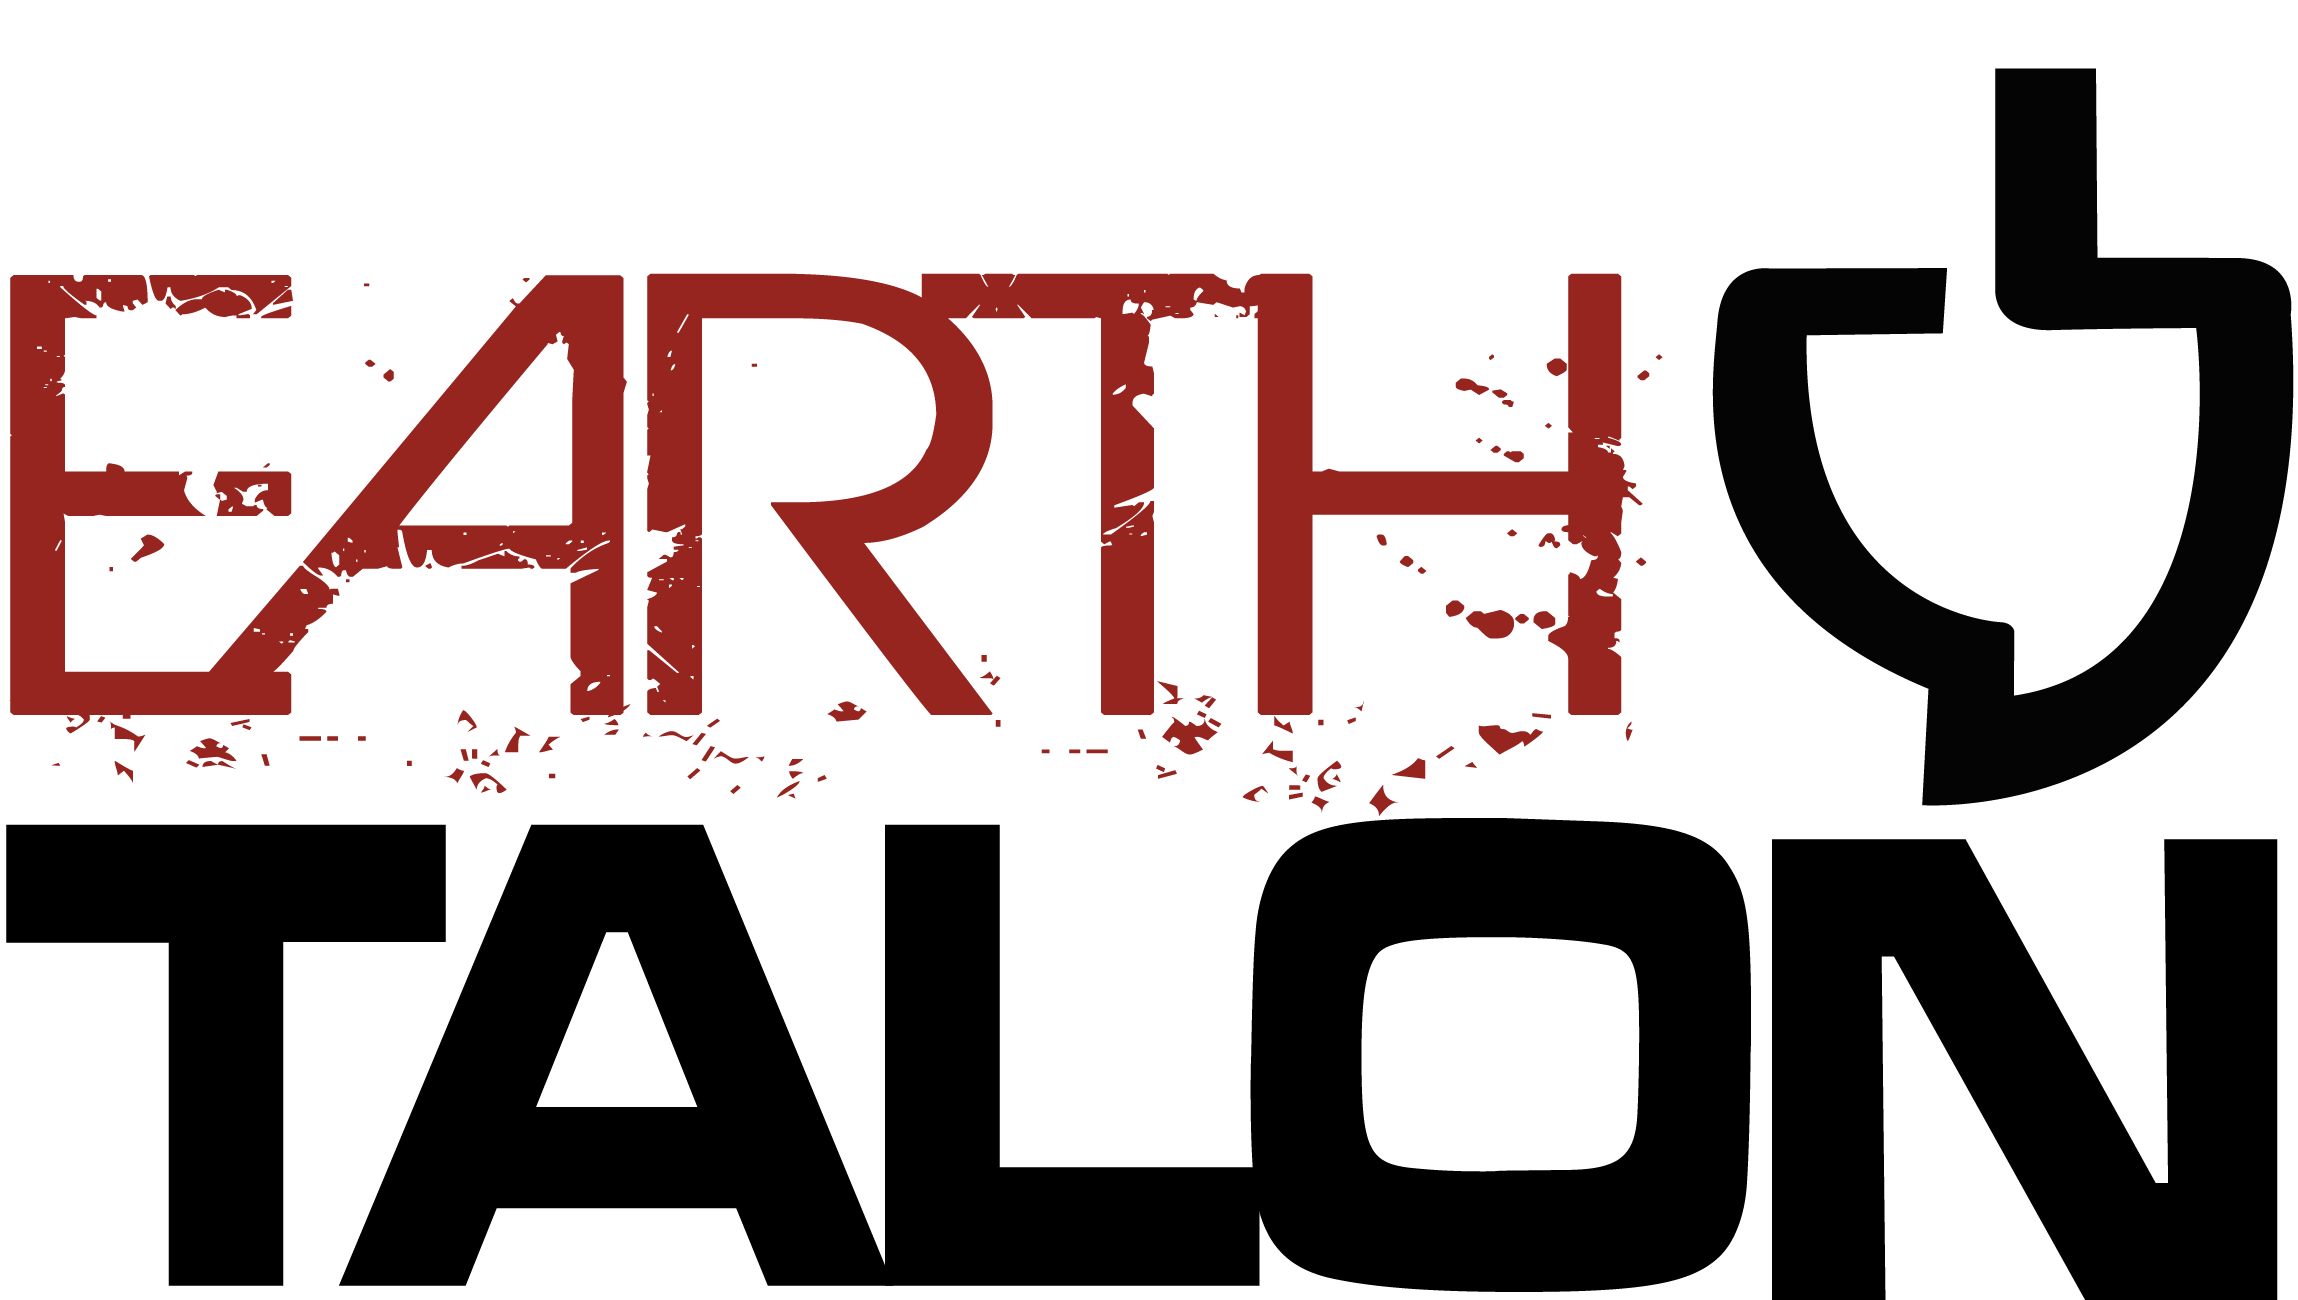 Earth Talon logo